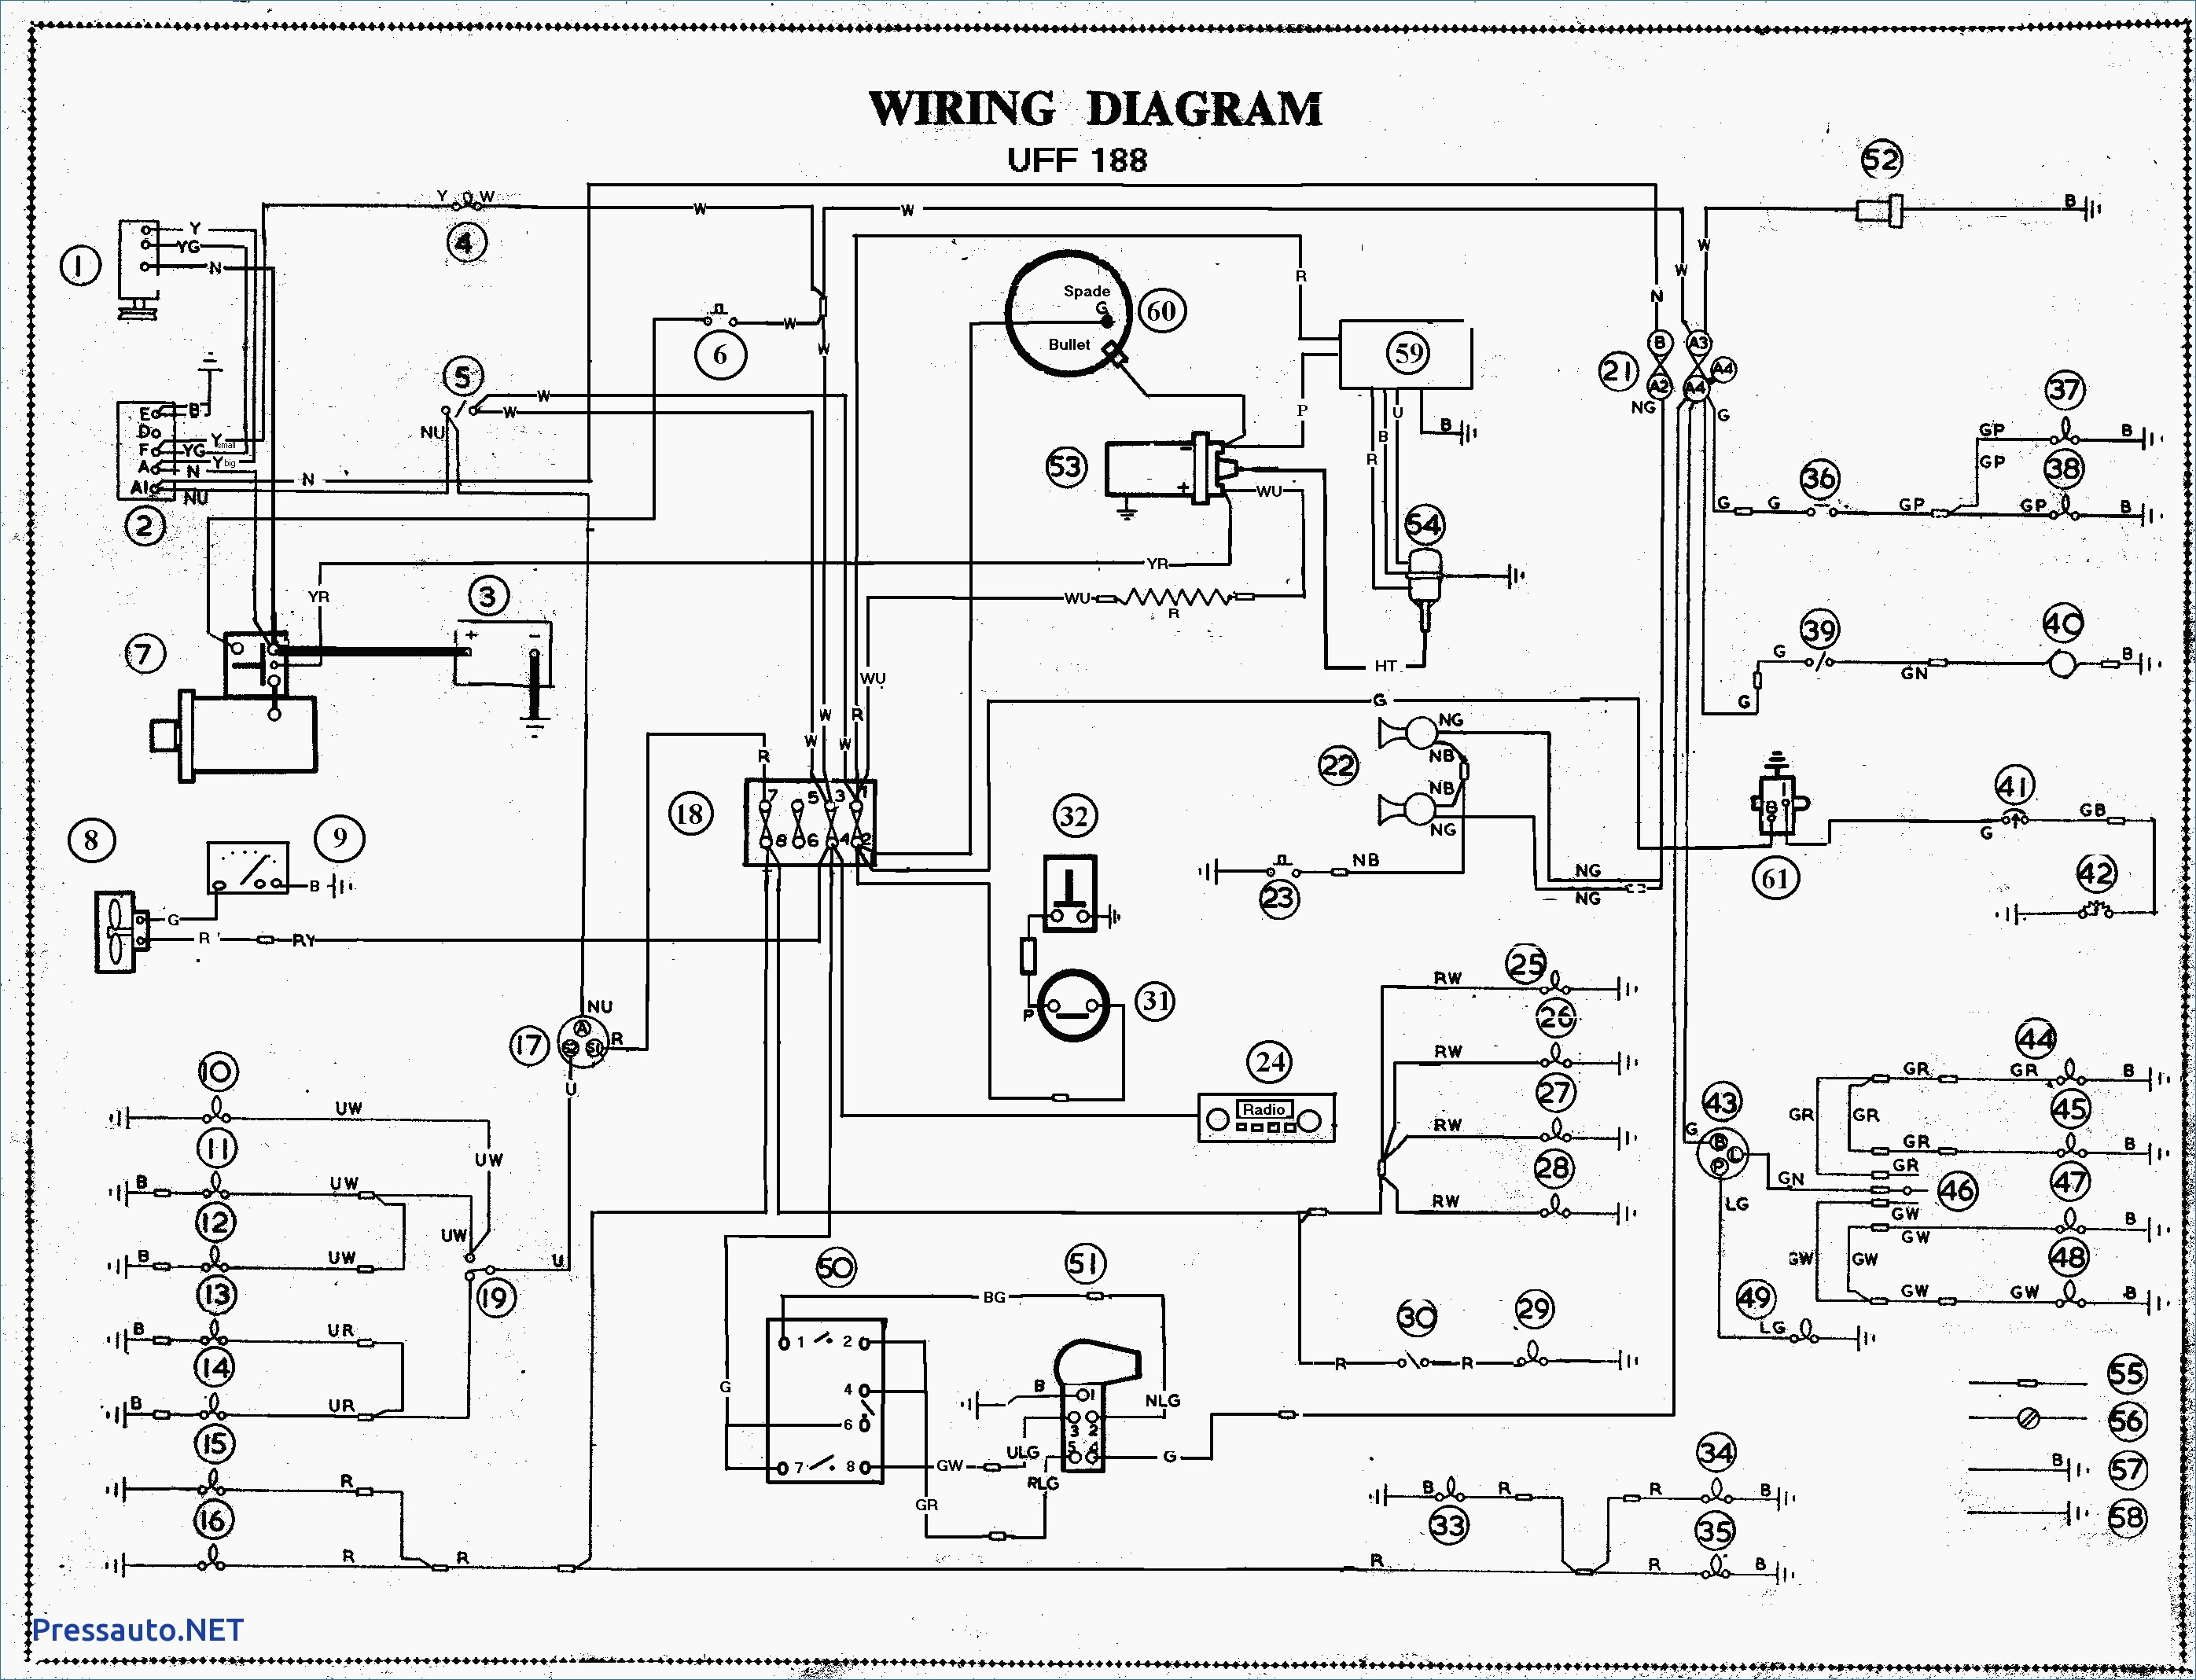 Bulldog Security Wiring Diagrams | Wiring Diagram - Bulldog Wiring Diagram